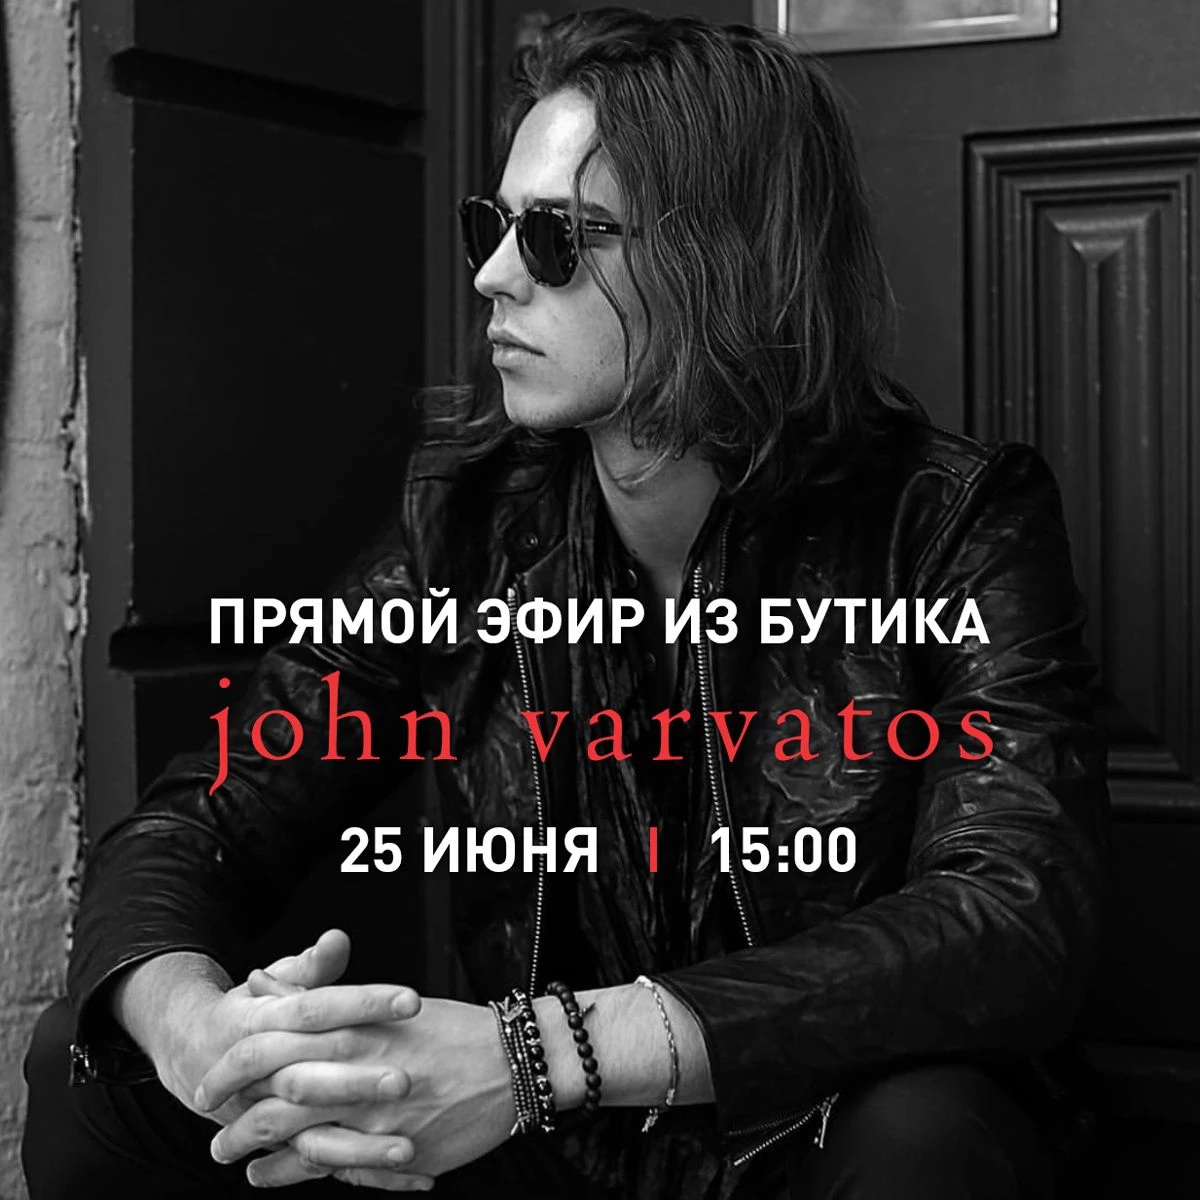 John Varvatos live: прямой эфир